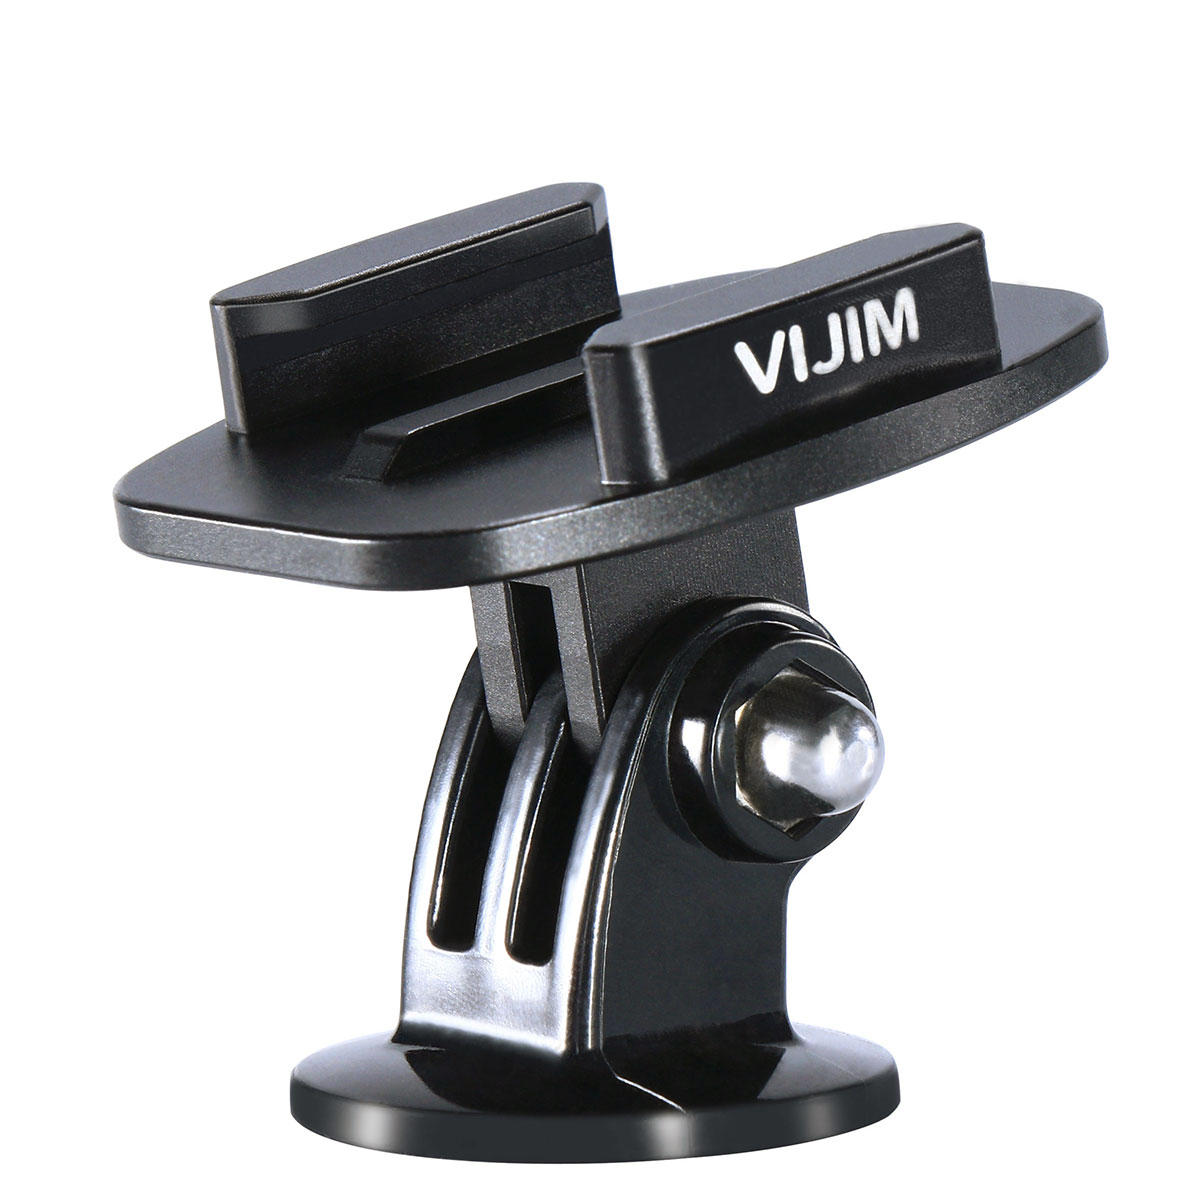 

VIJIM GP-2 Quick Release Plate Bracket Mount Adapter Base for Gopro Hero DJI OSMO Action SJCAM EKEN Sports Camera